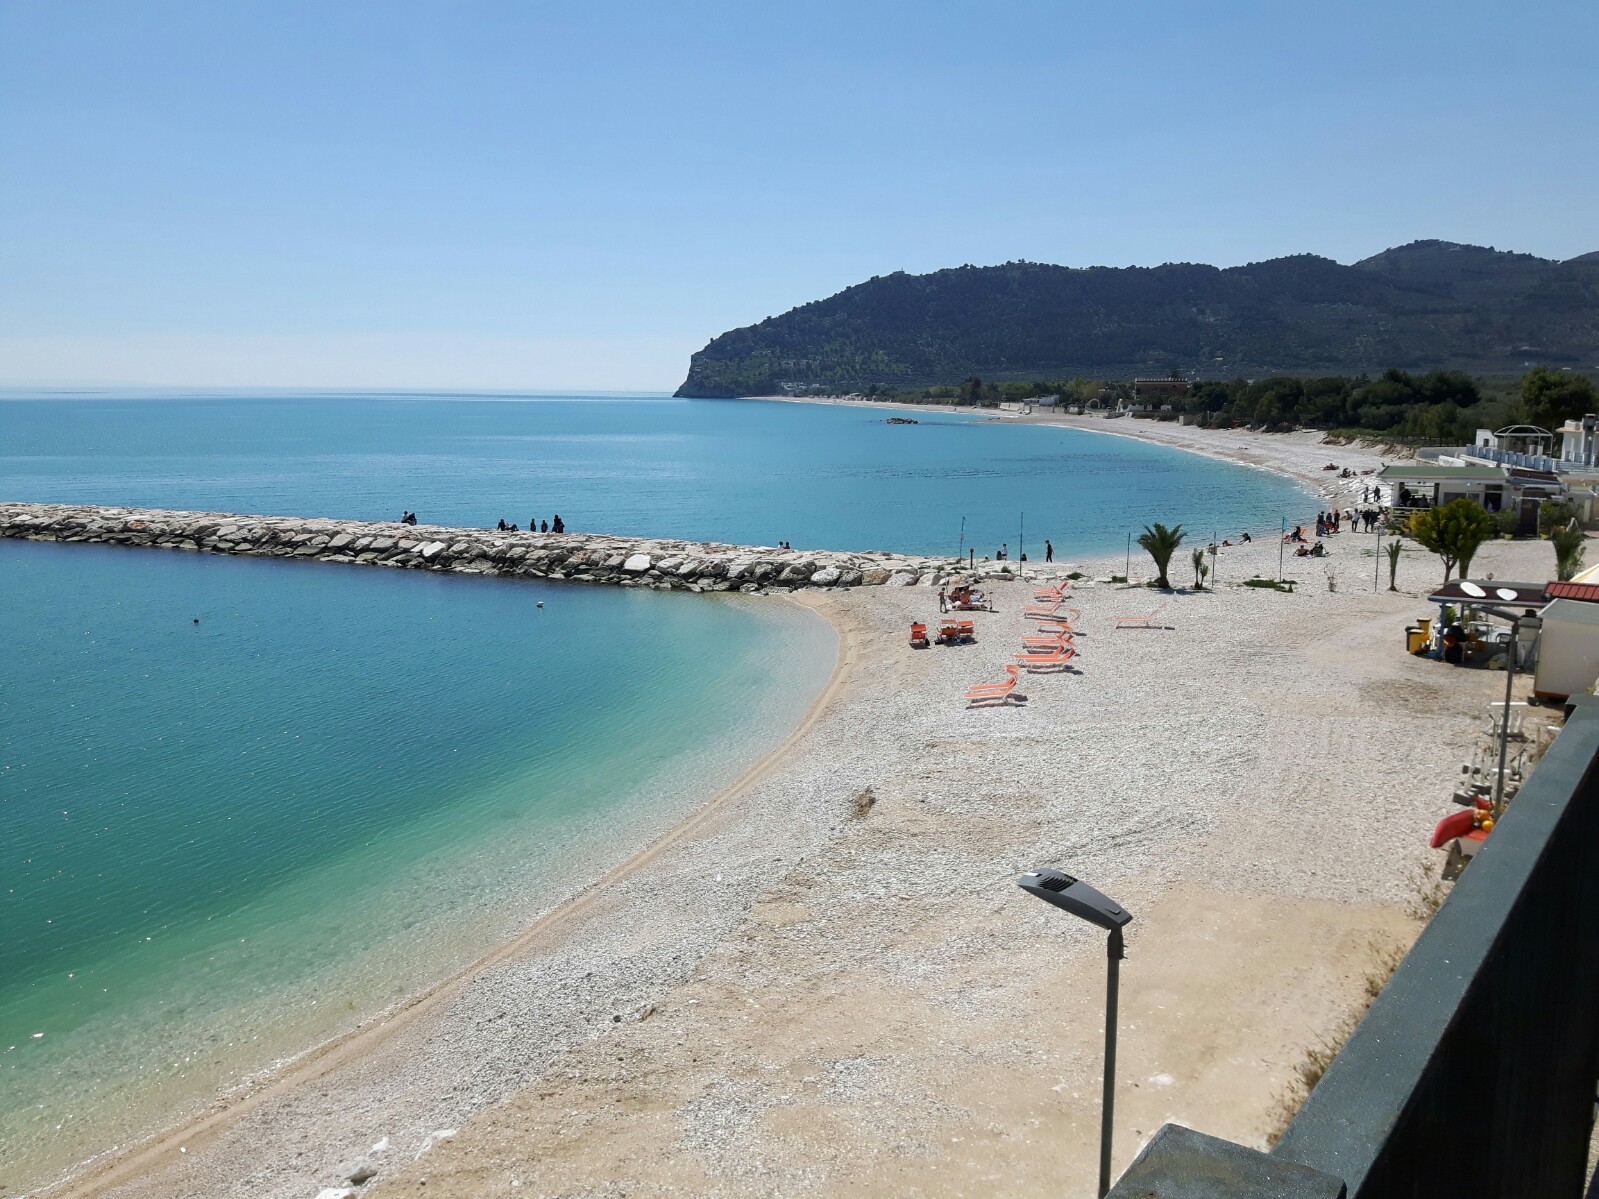 Spiaggia di Piana di Mattinata'in fotoğrafı hafif ince çakıl taş yüzey ile